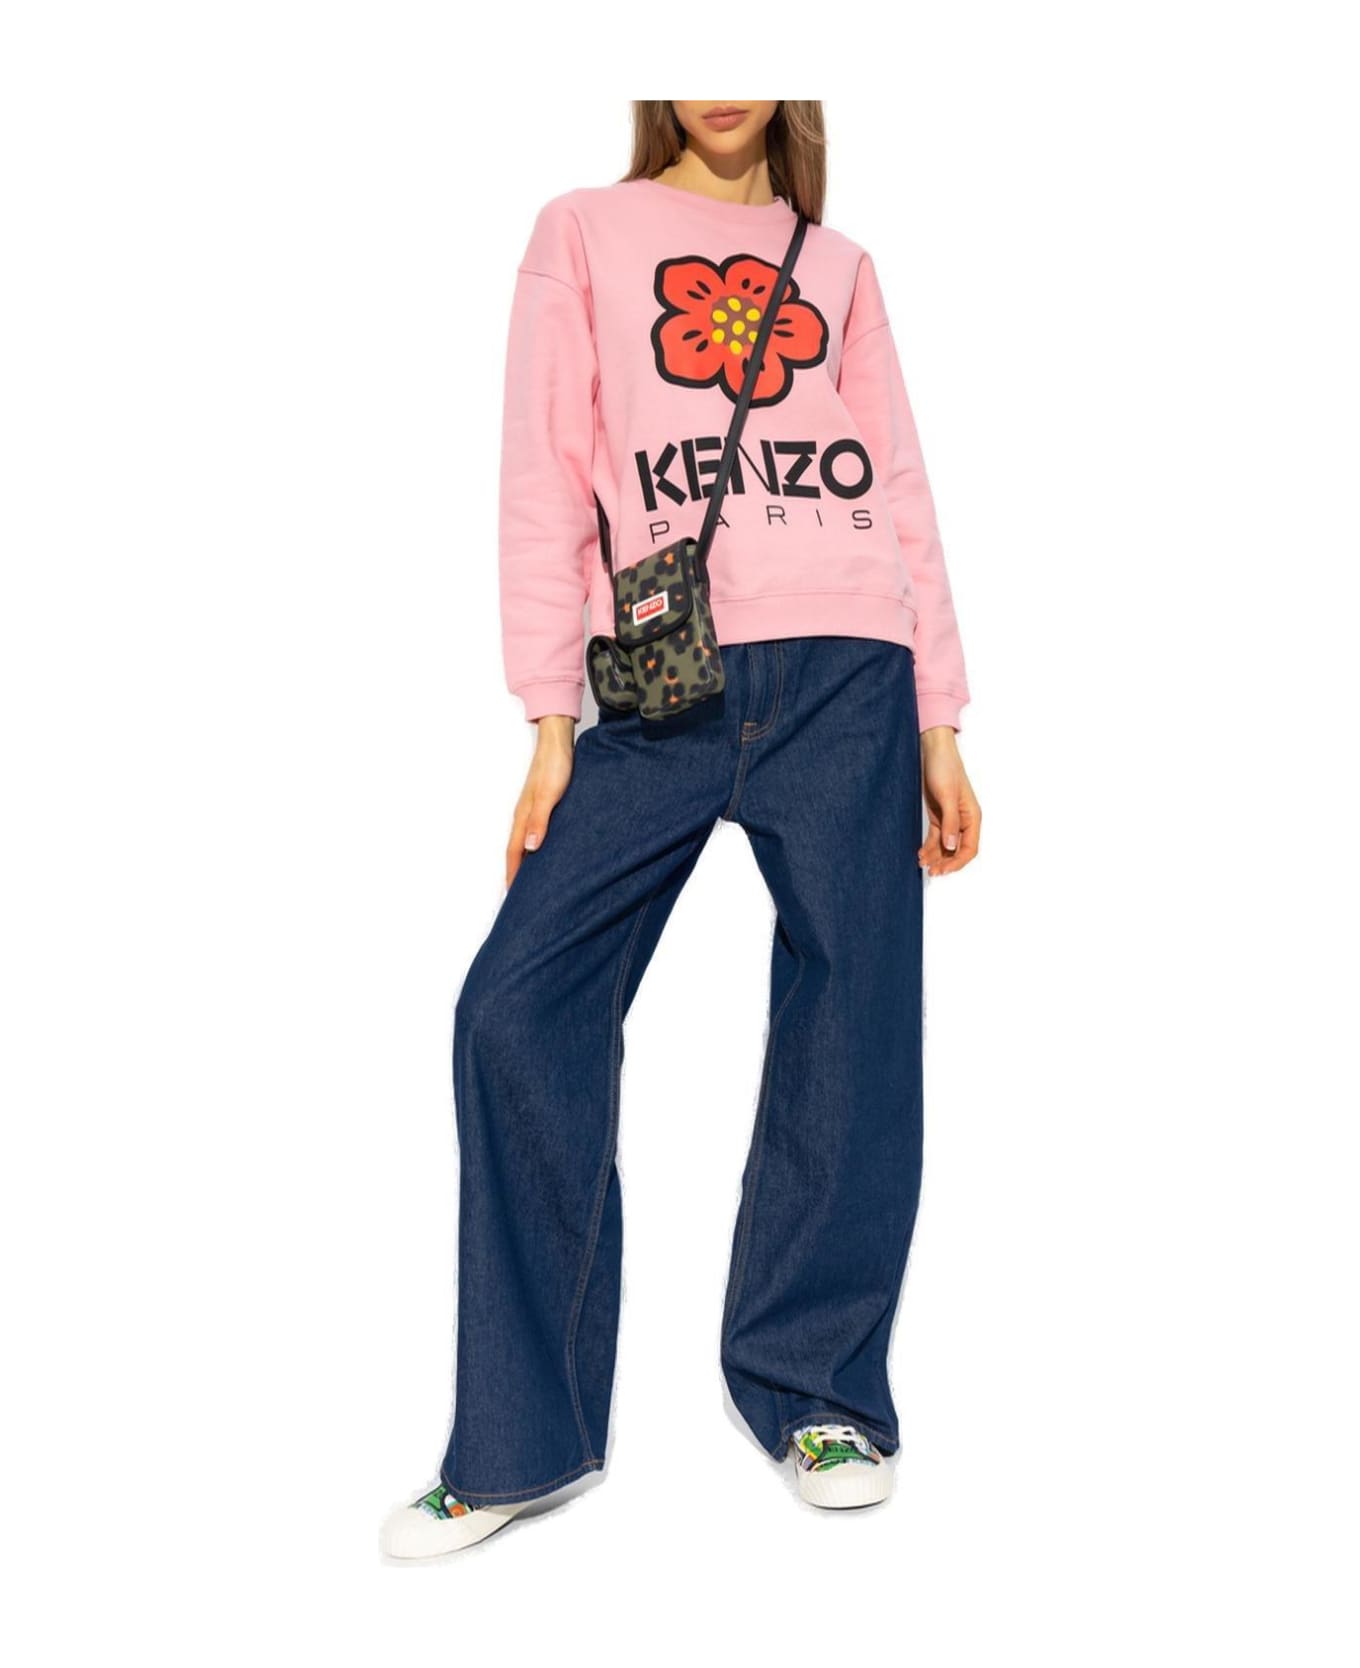 Kenzo Logo Printed Crewneck Sweatshirt - Rosa